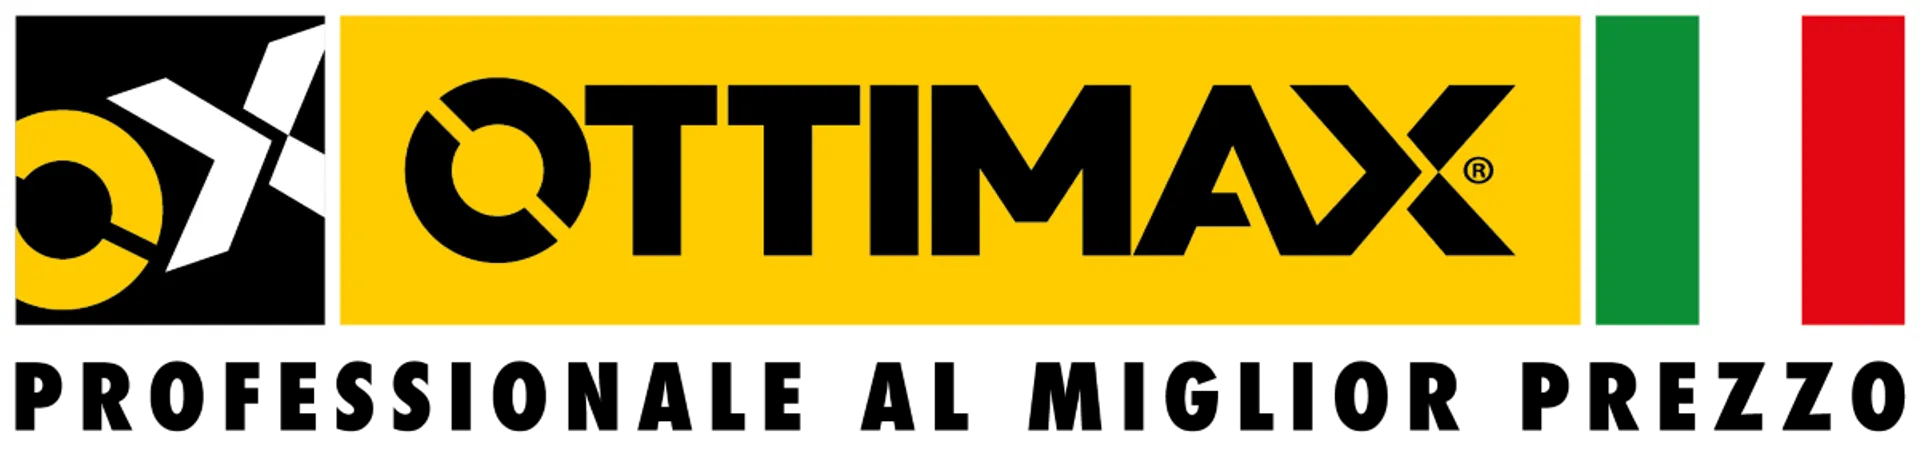 OTTIMAX logo